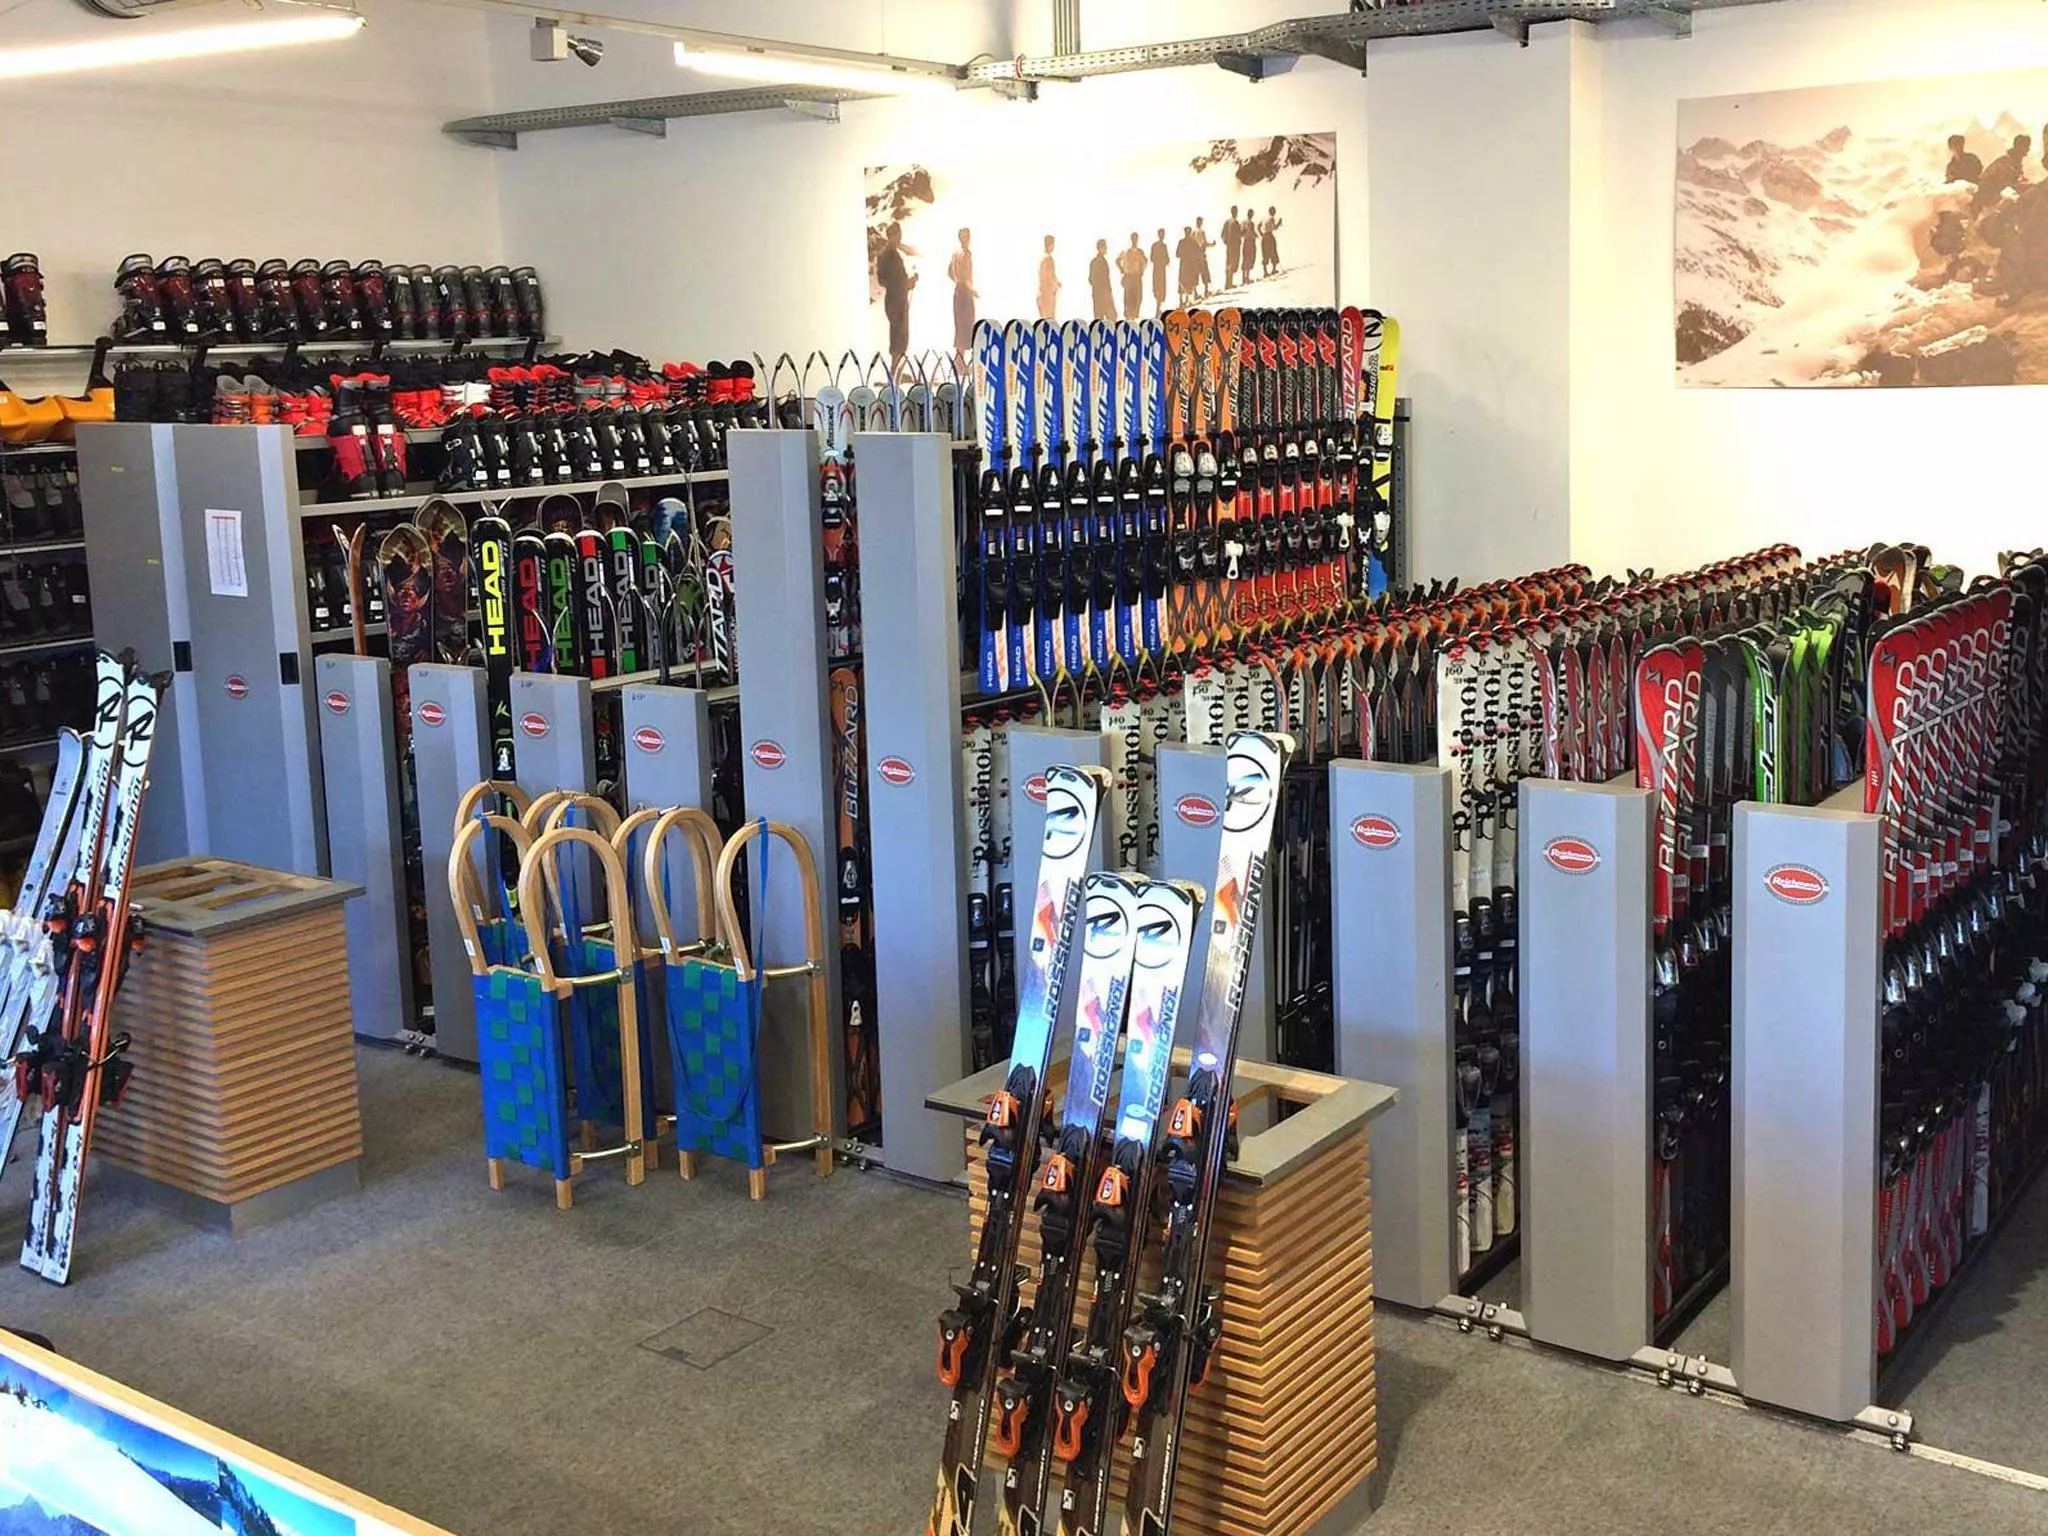 Ski Rental №4 GK Bukovel in Ukraine, Europe | Snowboarding,Skiing - Rated 0.8